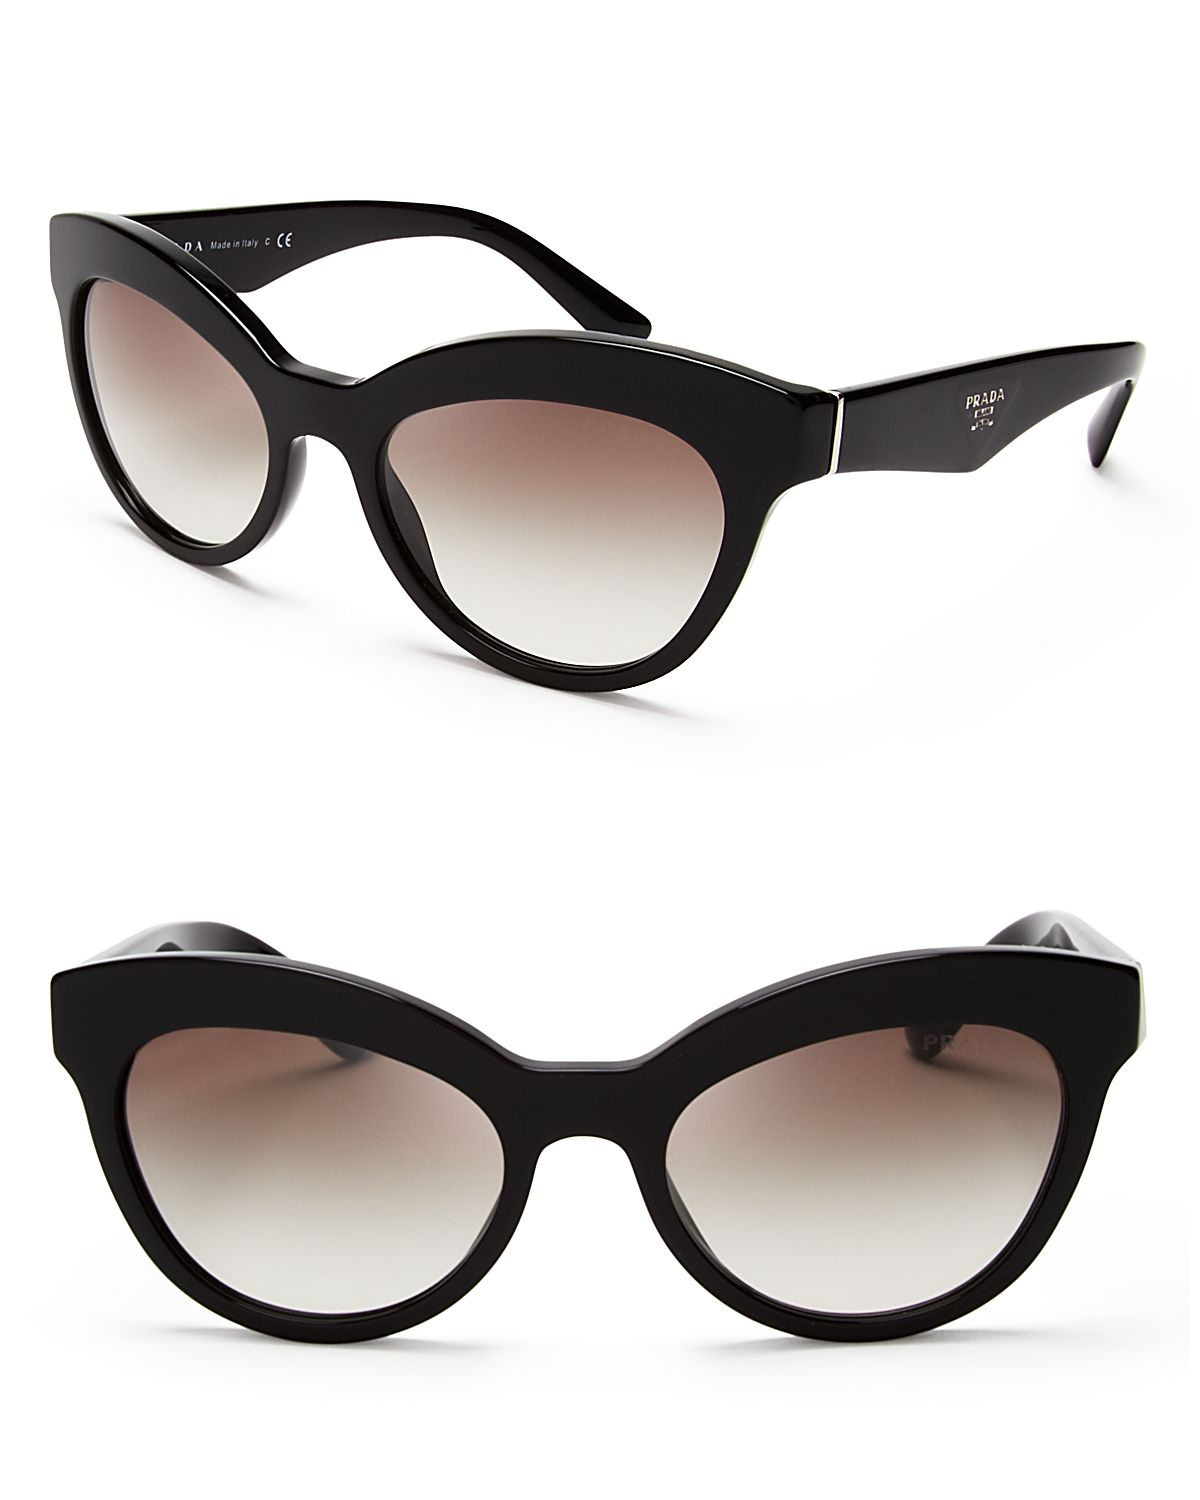 Prada Heritage Cat Eye Sunglasses in Black - Lyst